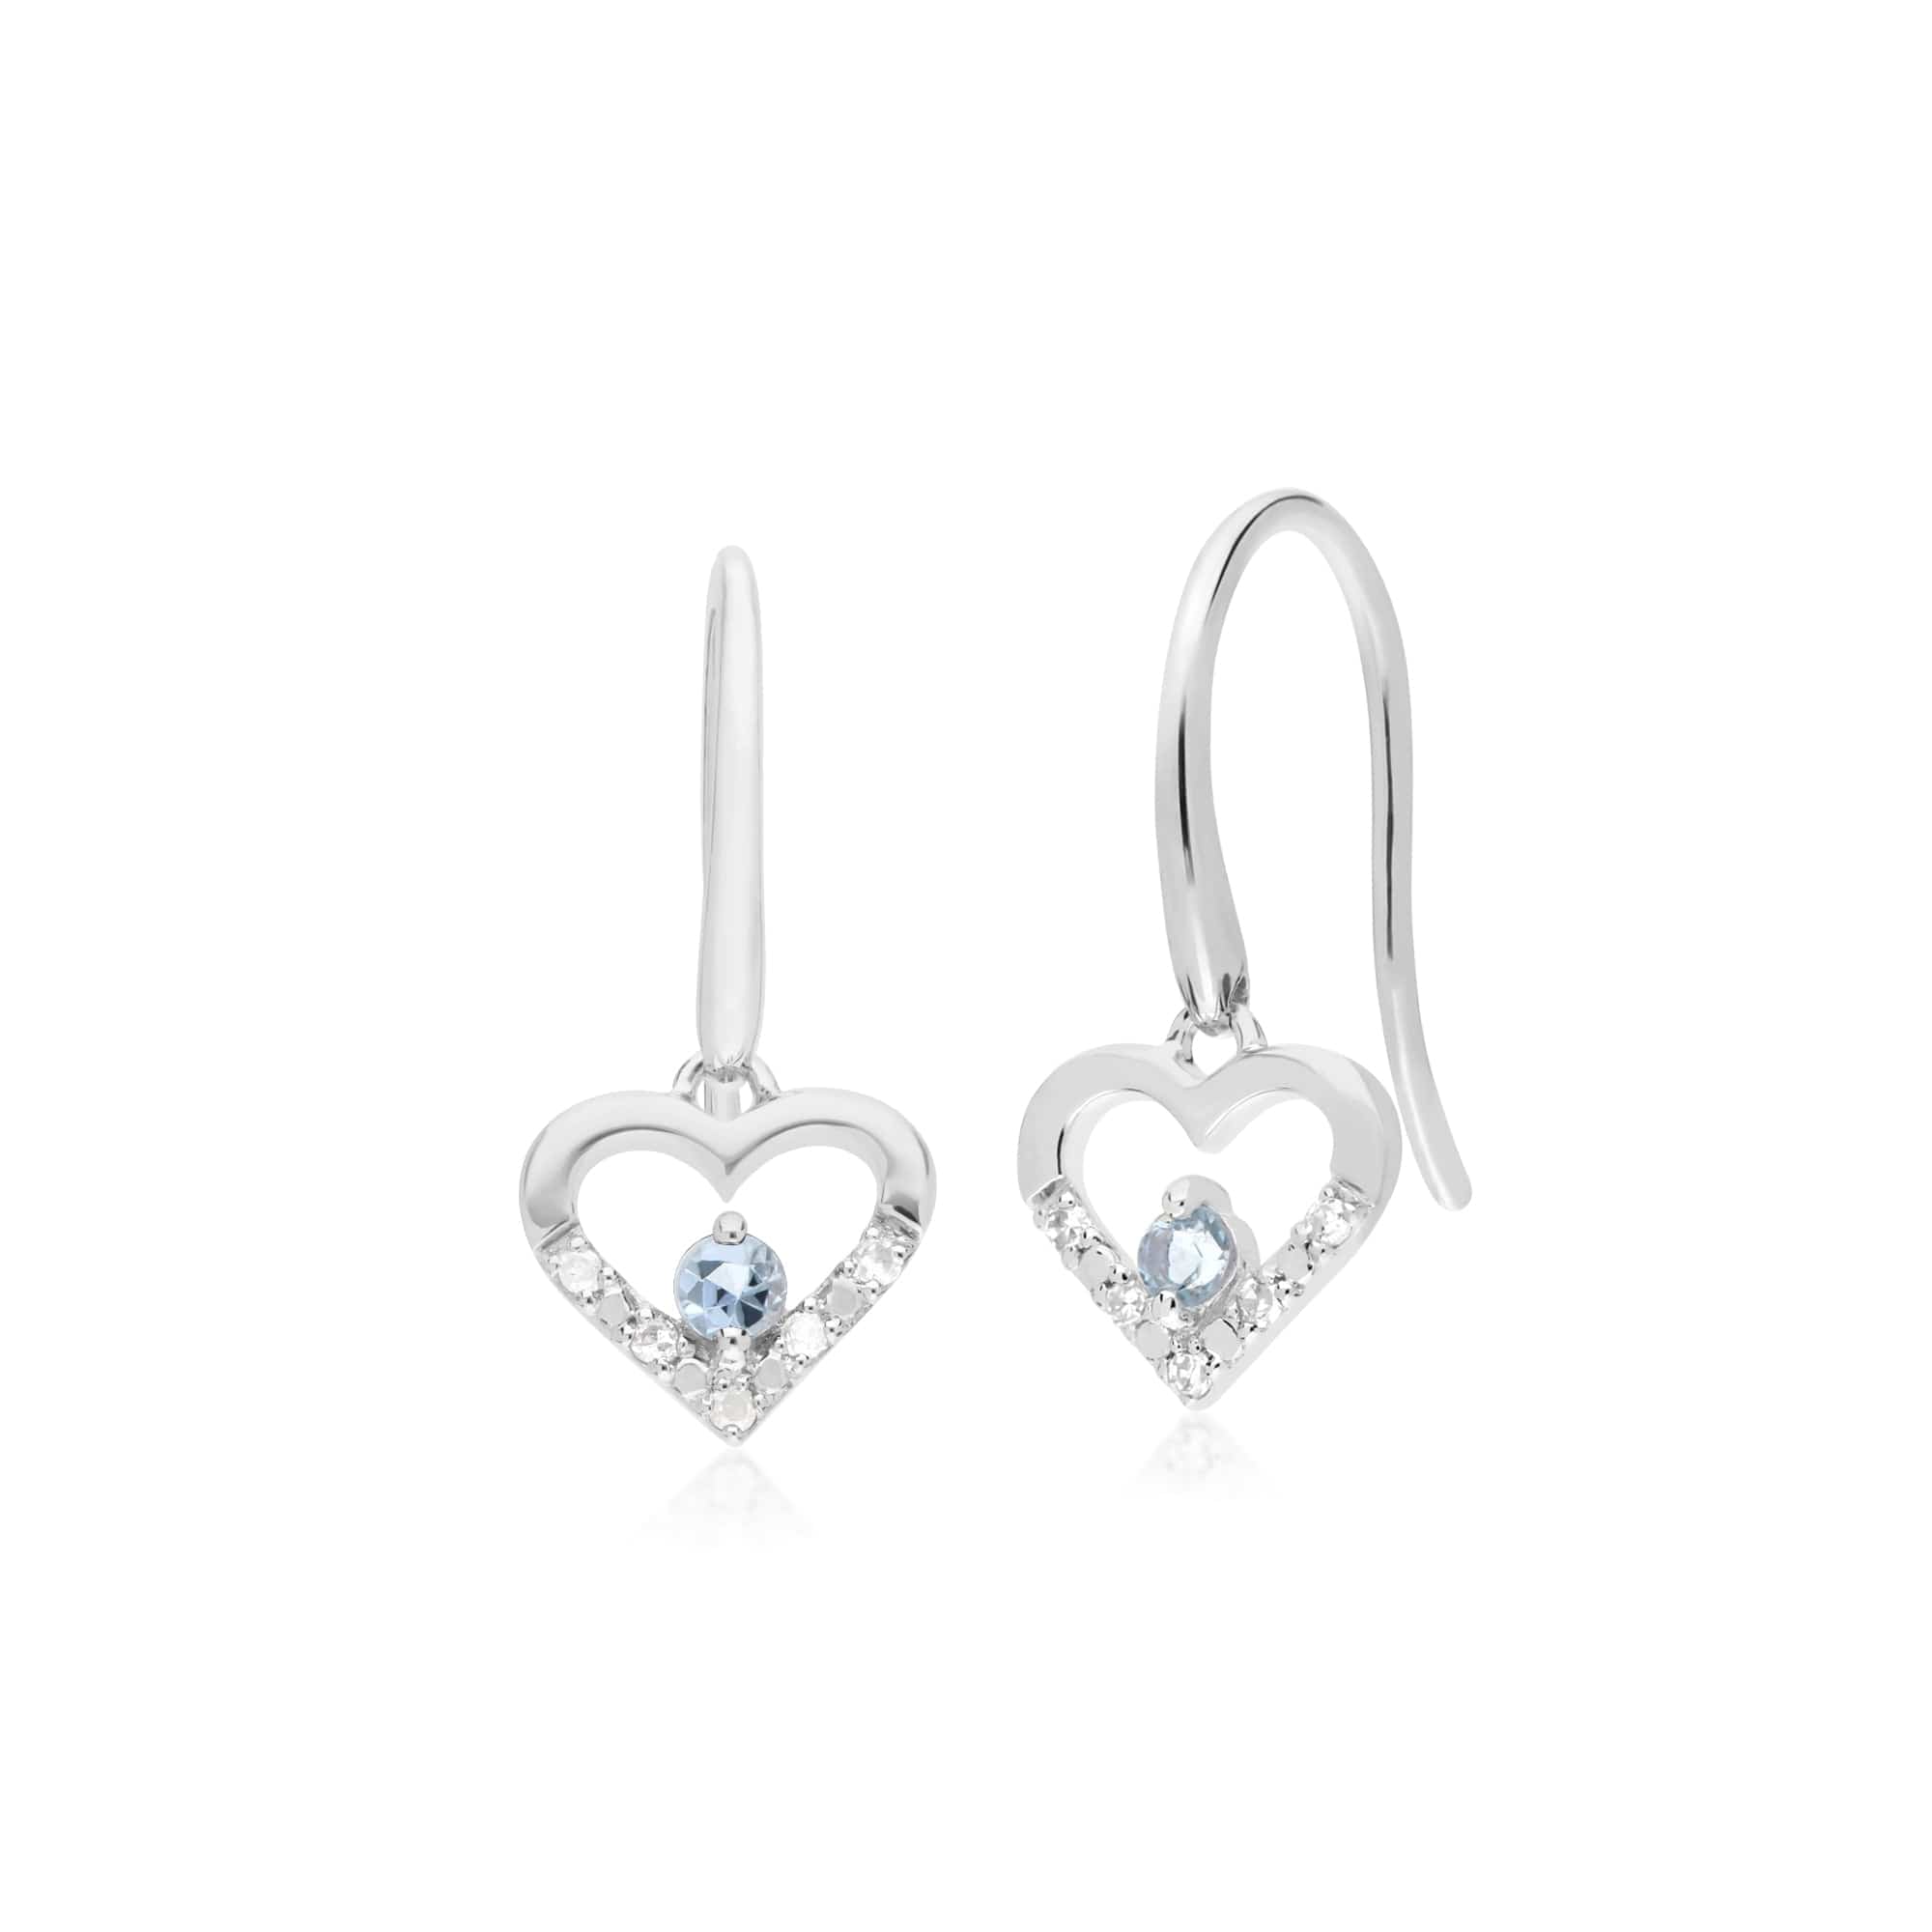 162E0258059-162P0219059 Classic Round Aquamarine & Diamond Heart Drop Earrings & Pendant Set in 9ct White Gold 2